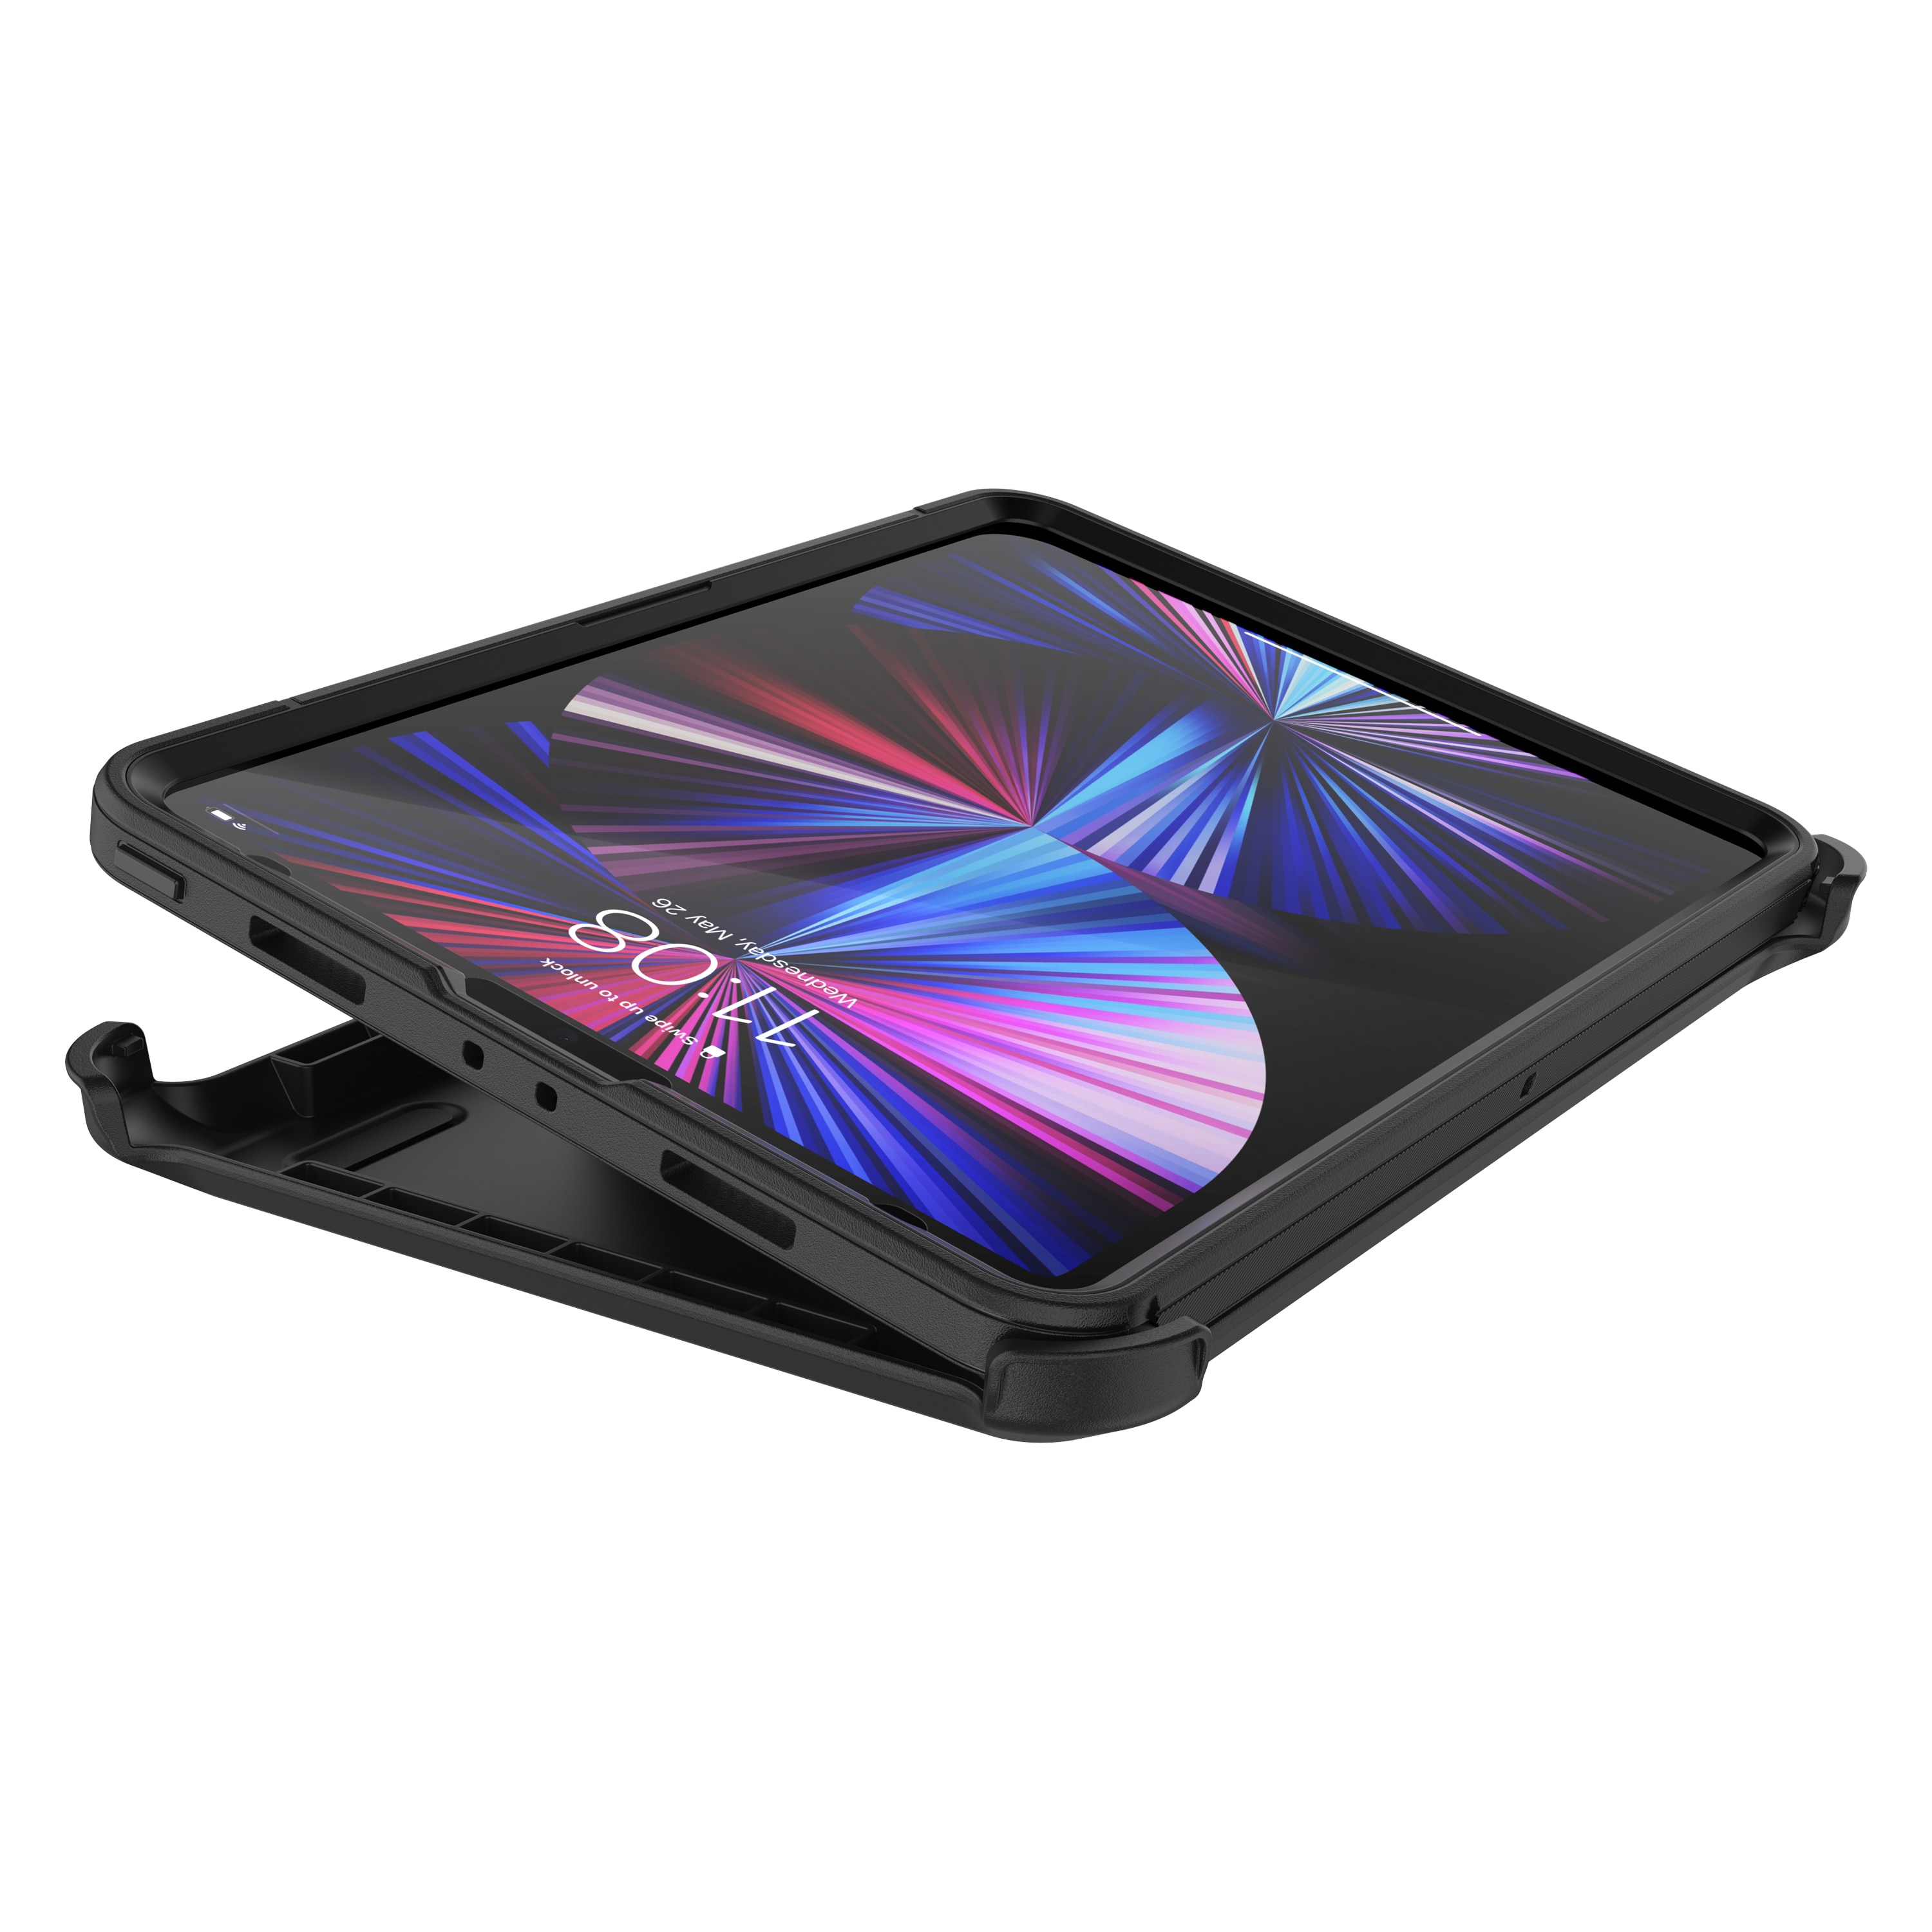 Defender Case iPad Pro 12.9 4th Gen (2020) black